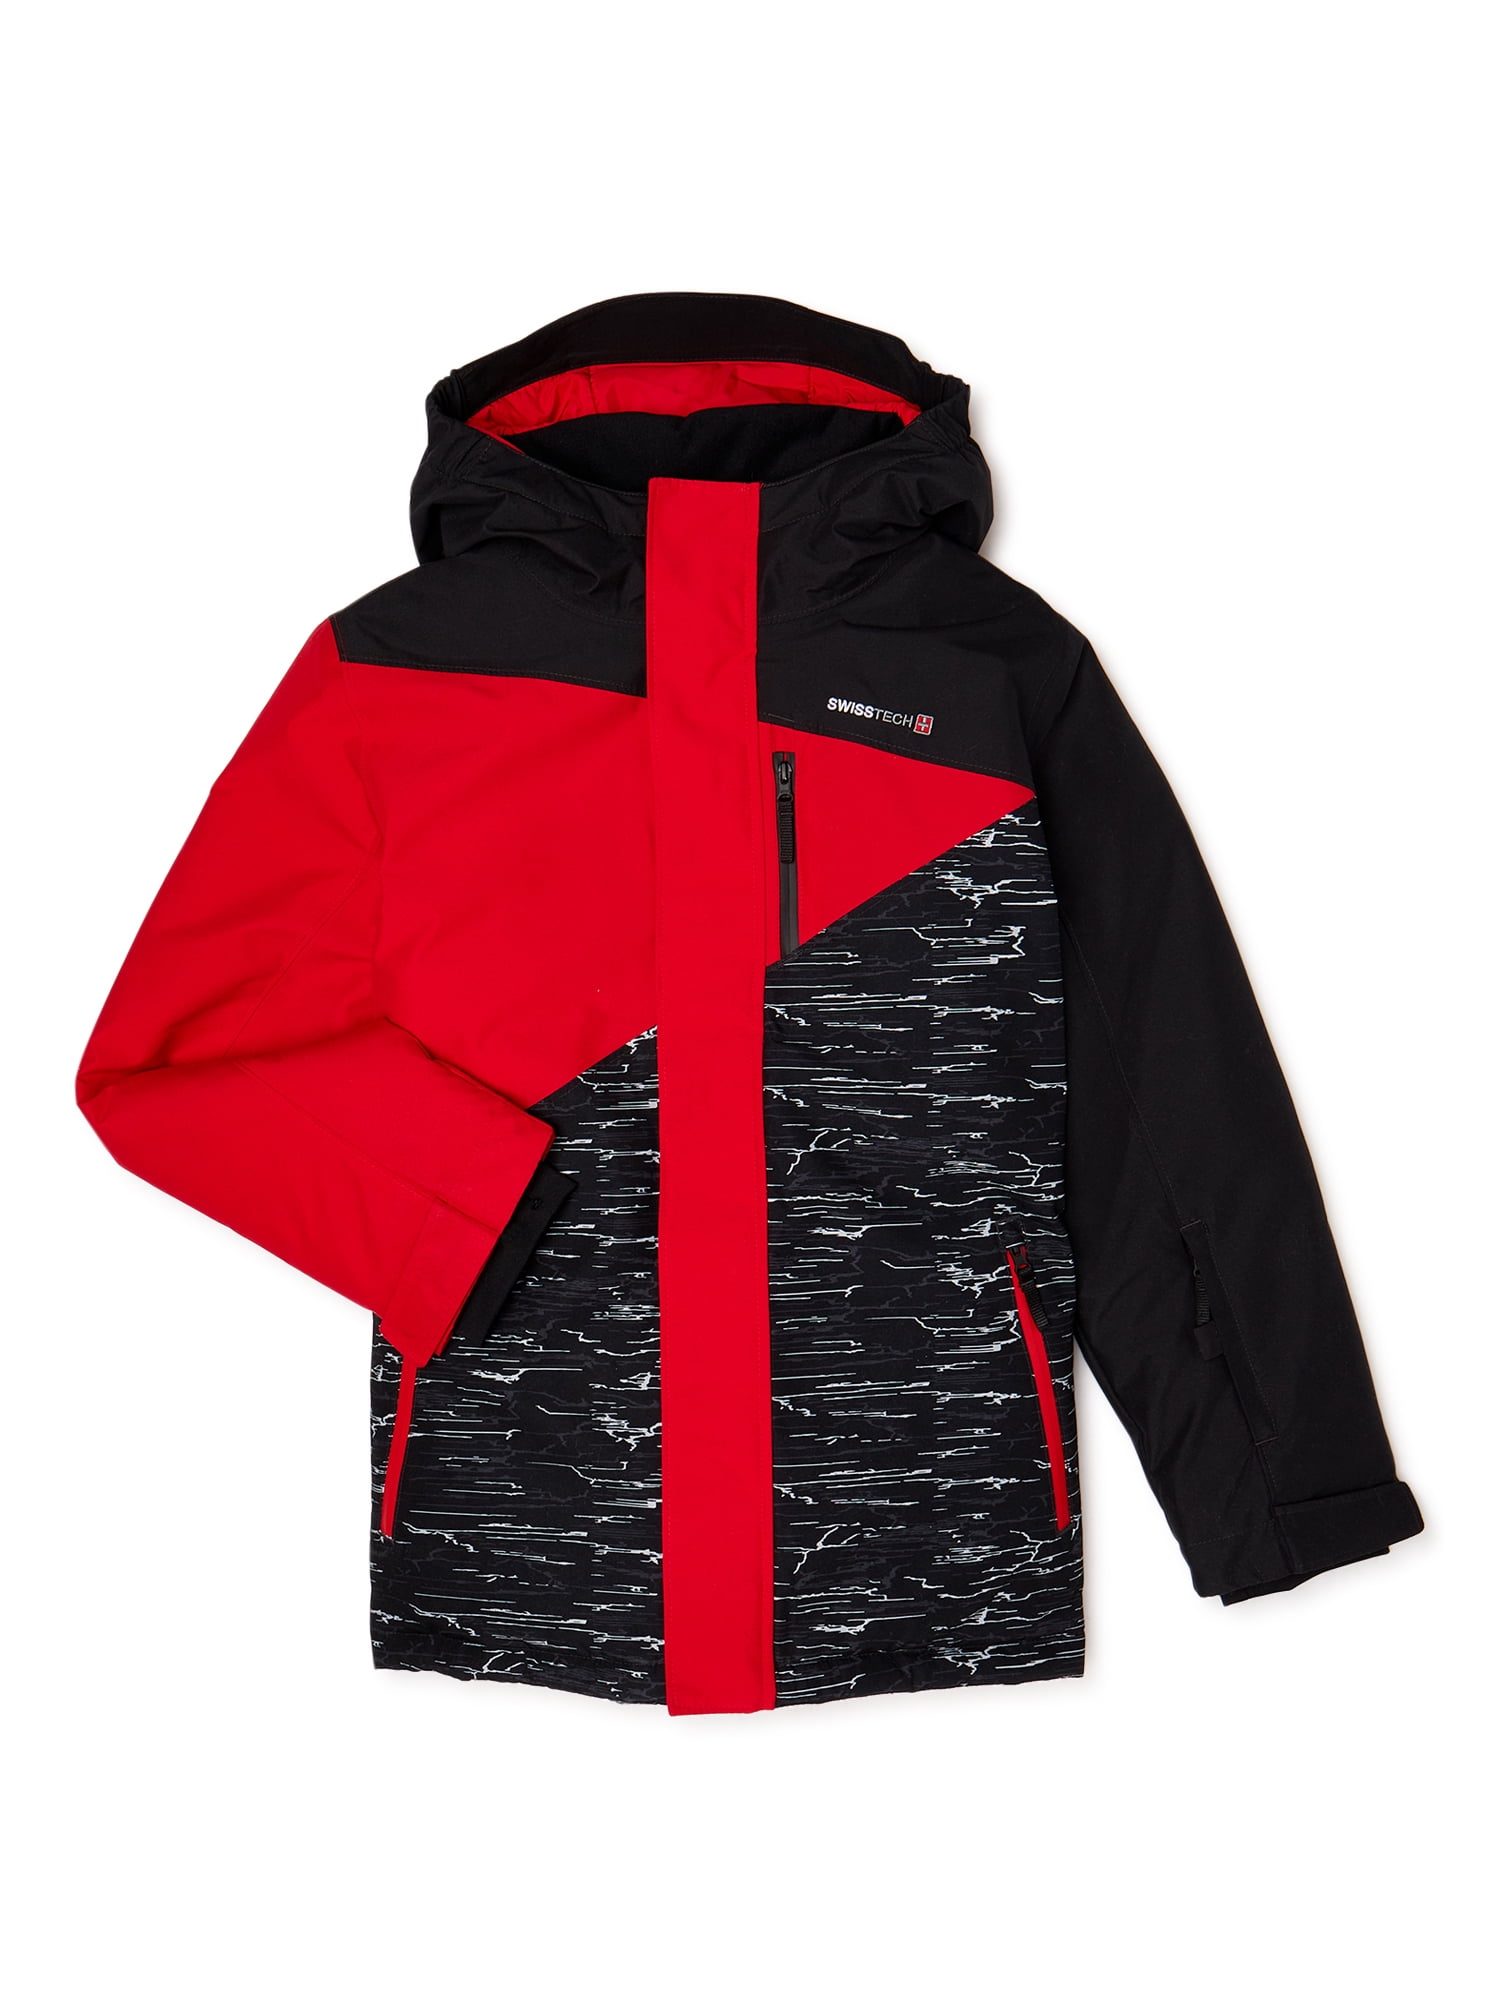 Swiss Tech Printed Ski Jacket with Hood Boys 4-16 - Walmart.com